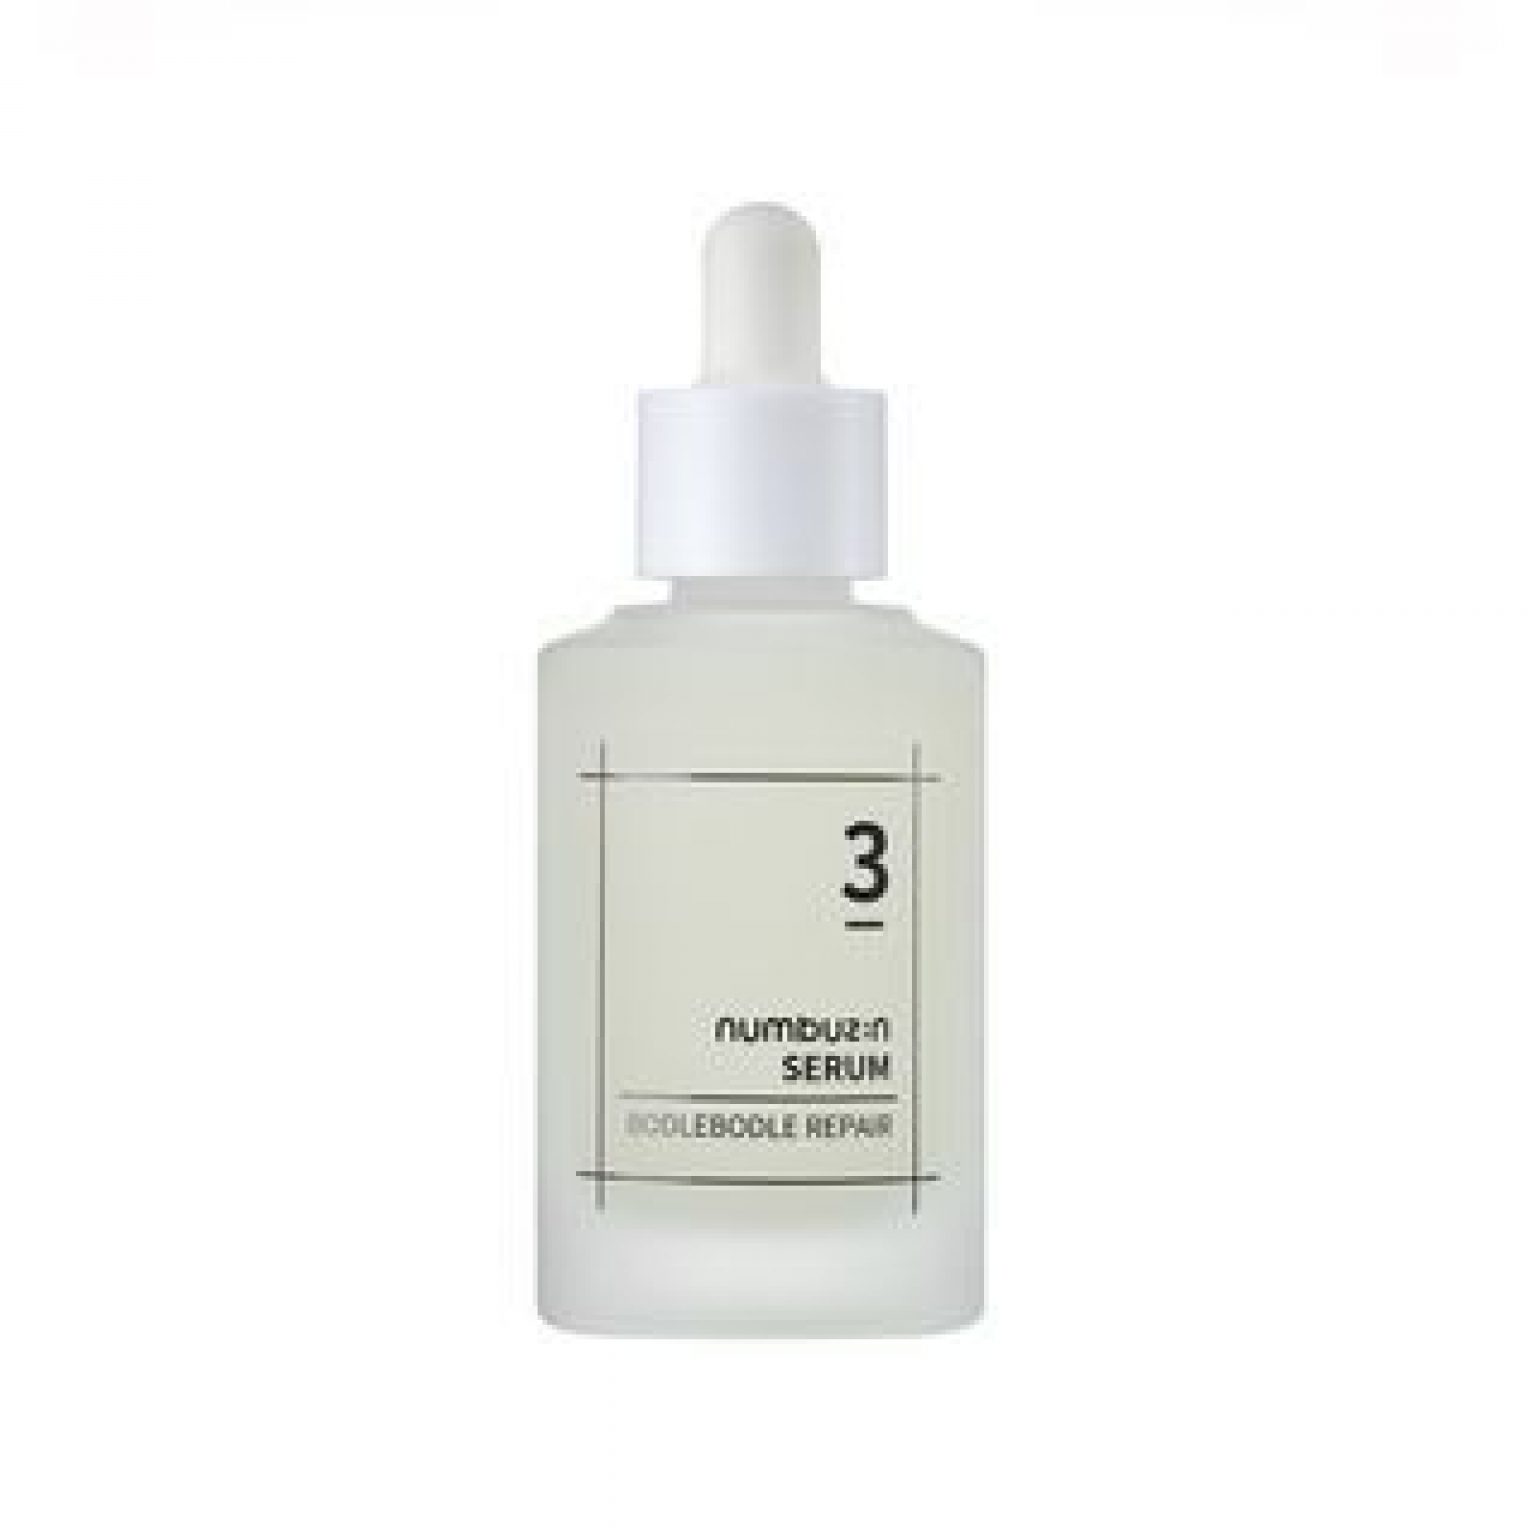 numbuzin - No. 3 Skin Softening Serum 50ml - Korean Skincare Canada